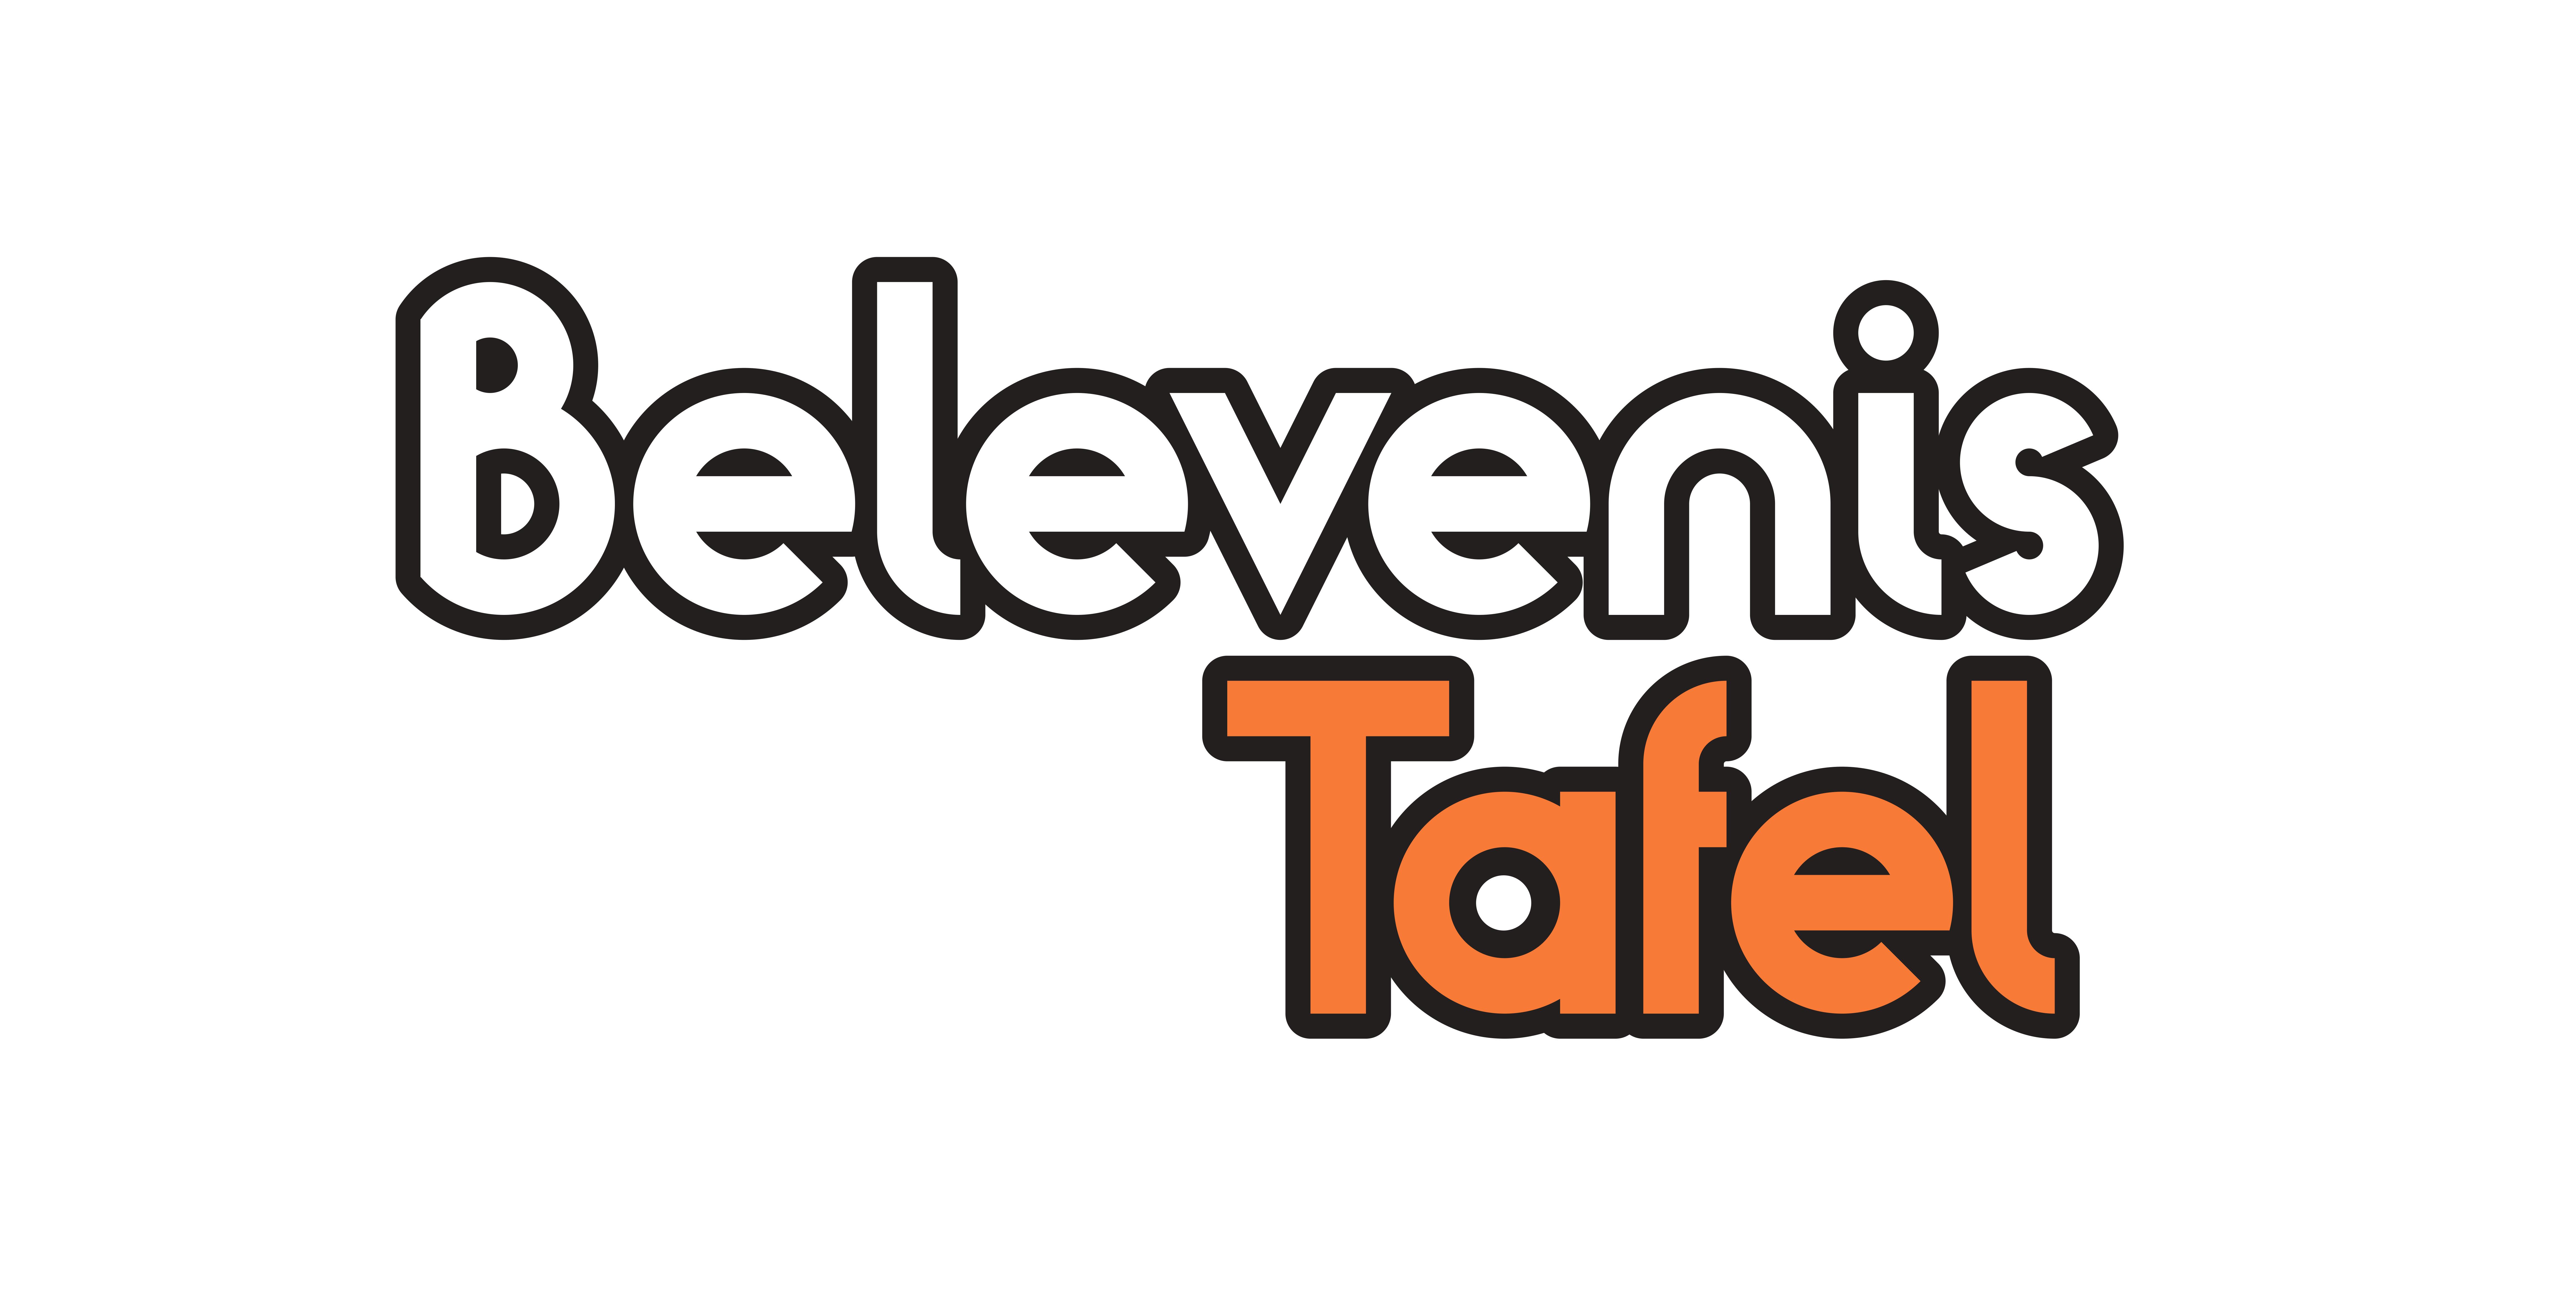 Logo Belevenistafel